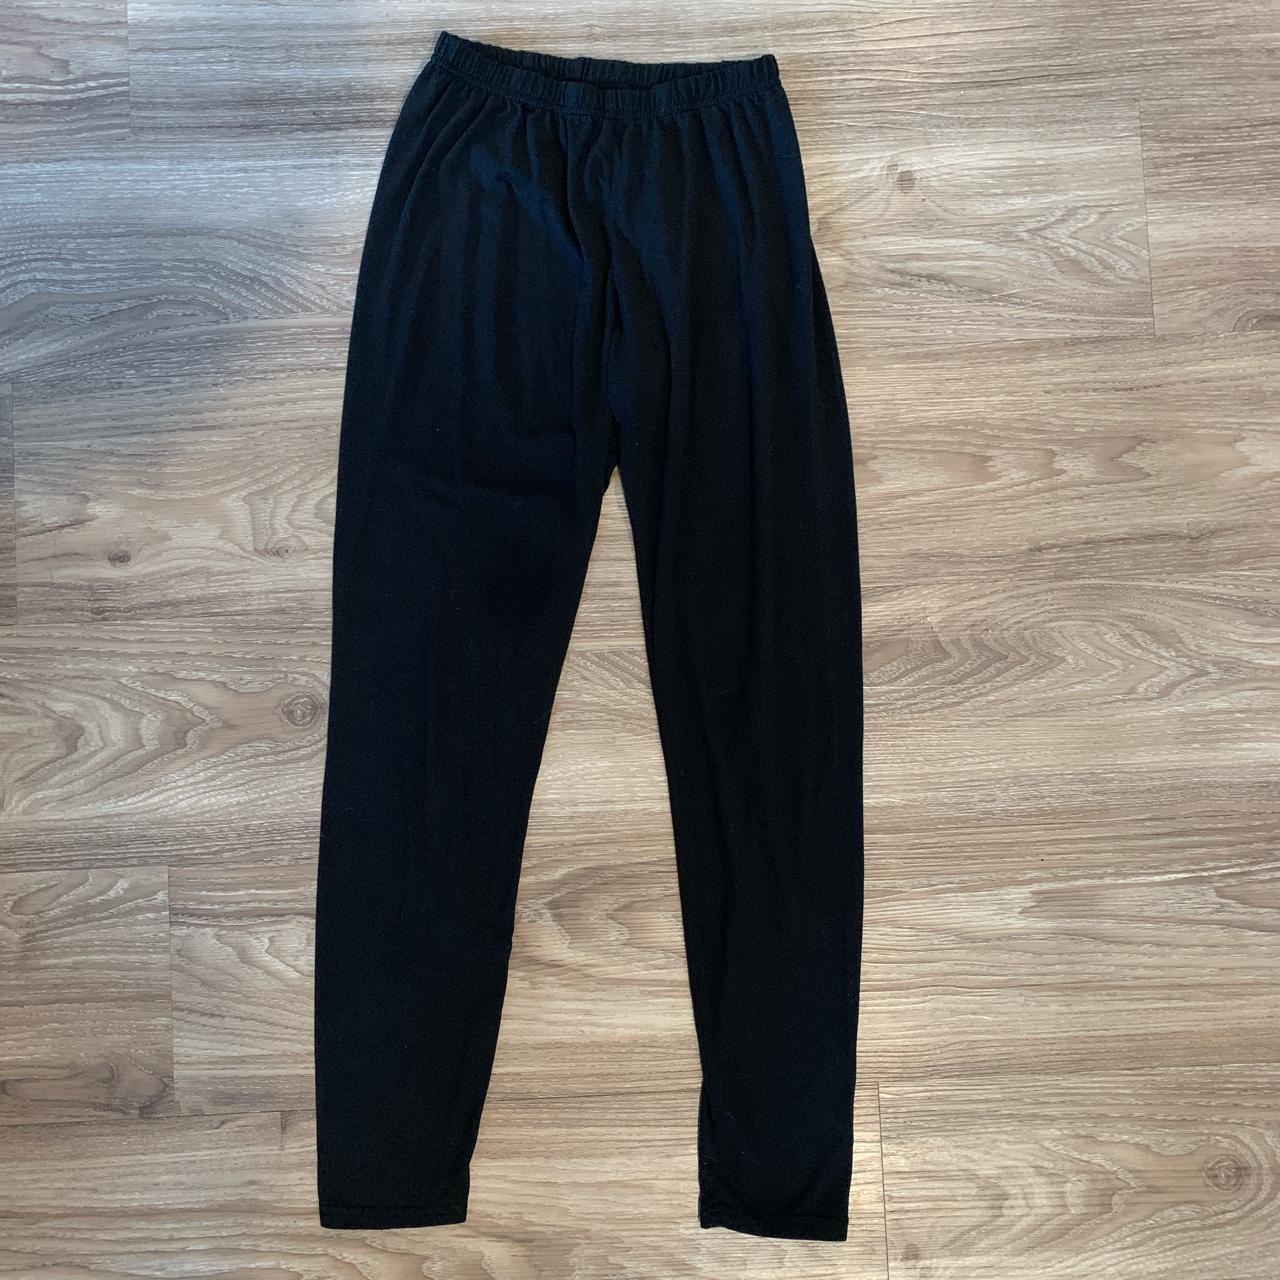 Black leggings - Brand Xhilaration from Target - - Depop